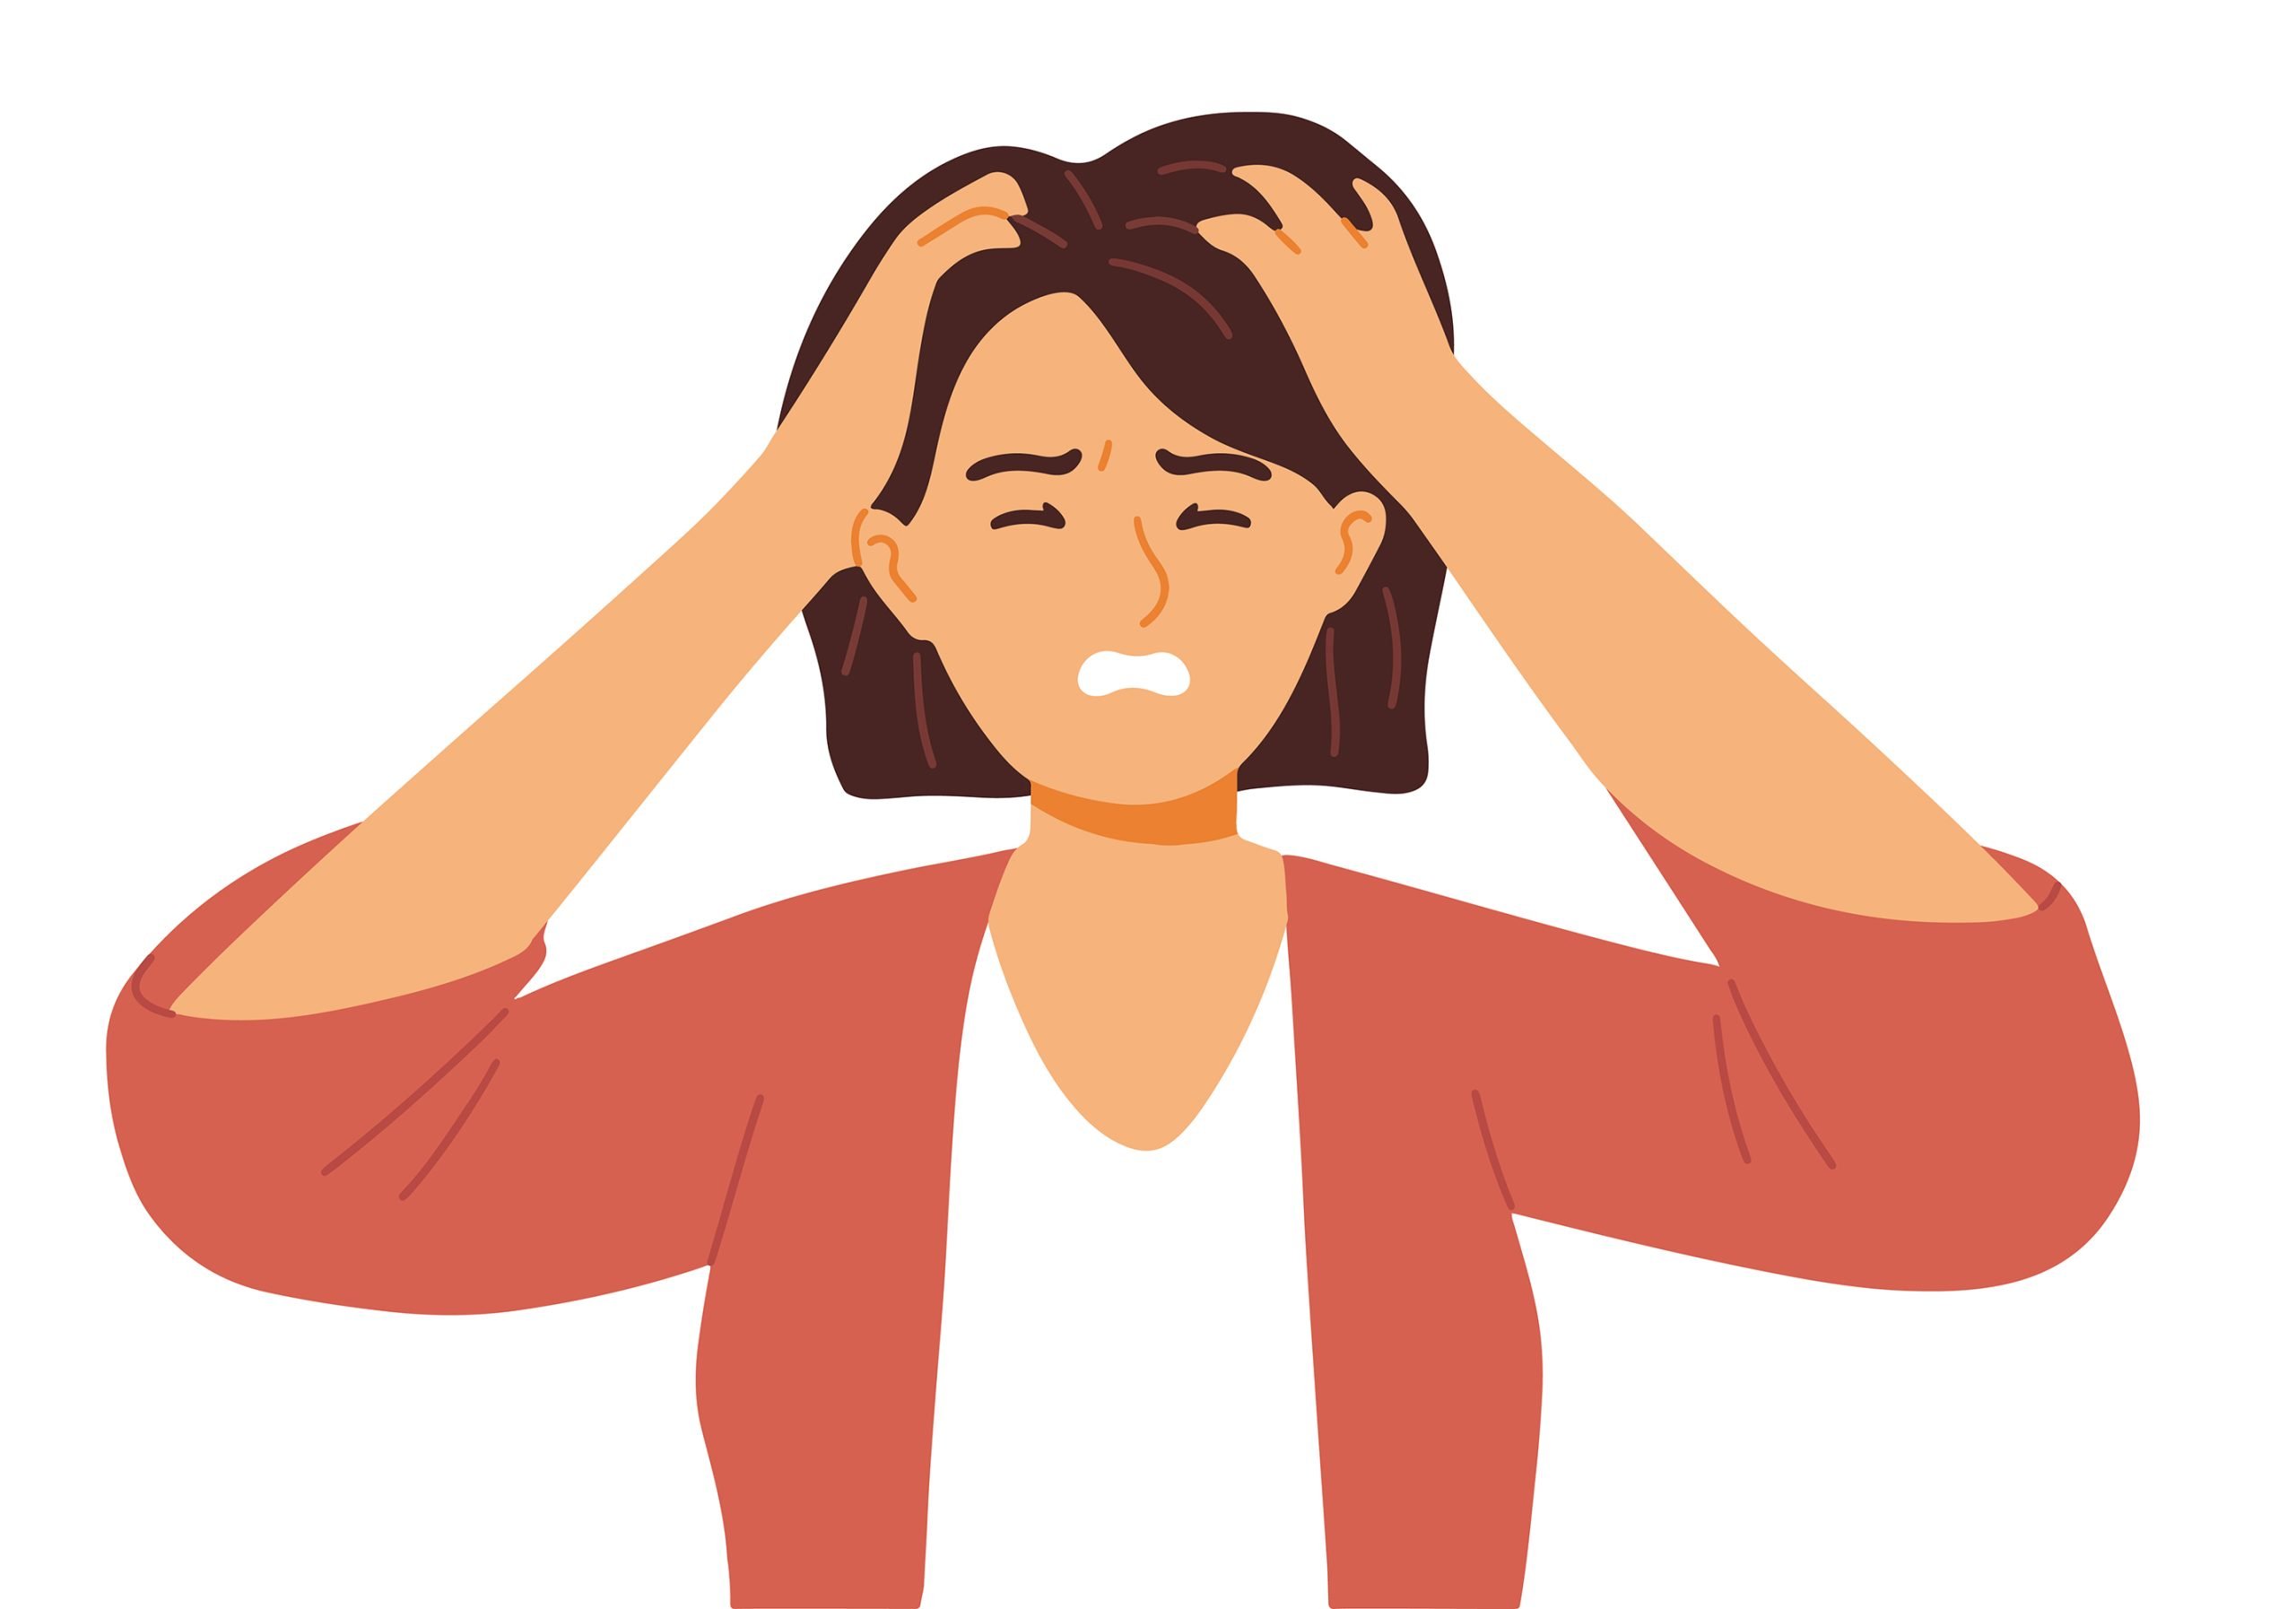 frustate stress sad calm problem emotion women illustration